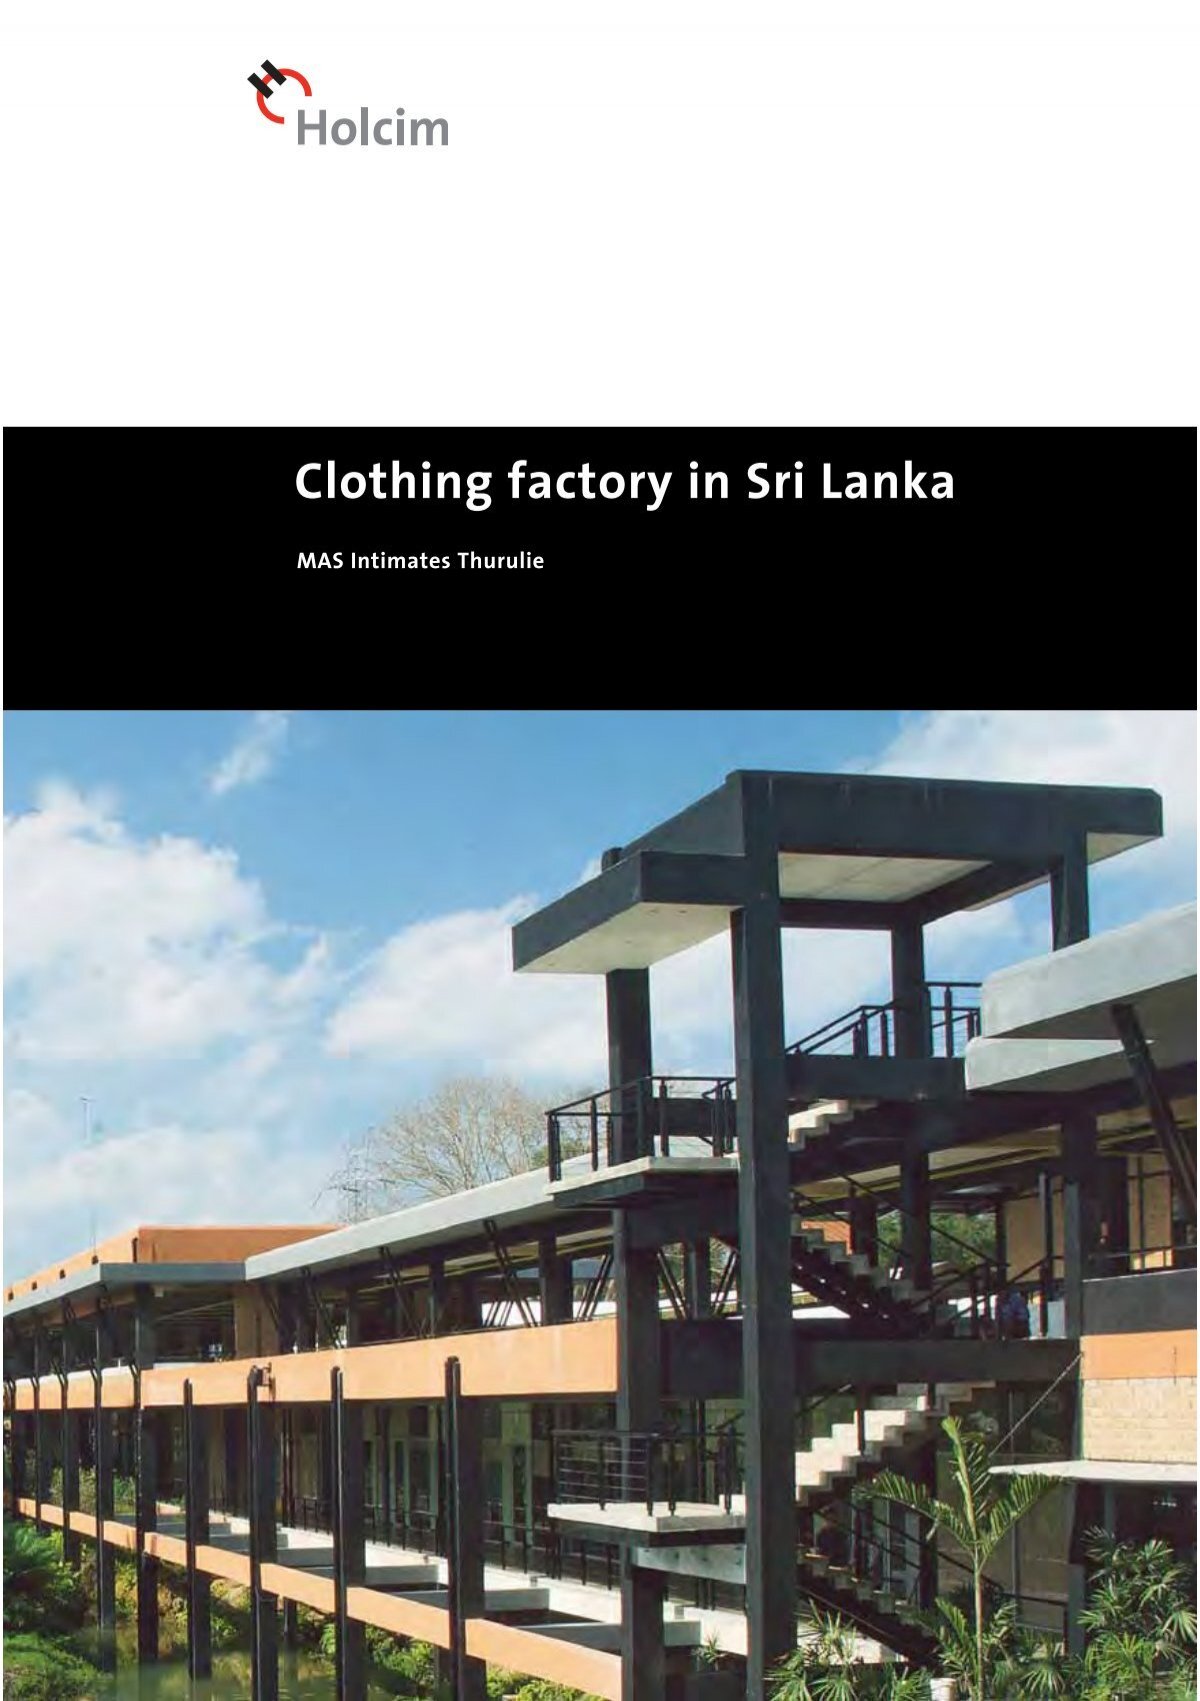 Clothing Factory In Sri Lanka Holcim Lanka Ltd